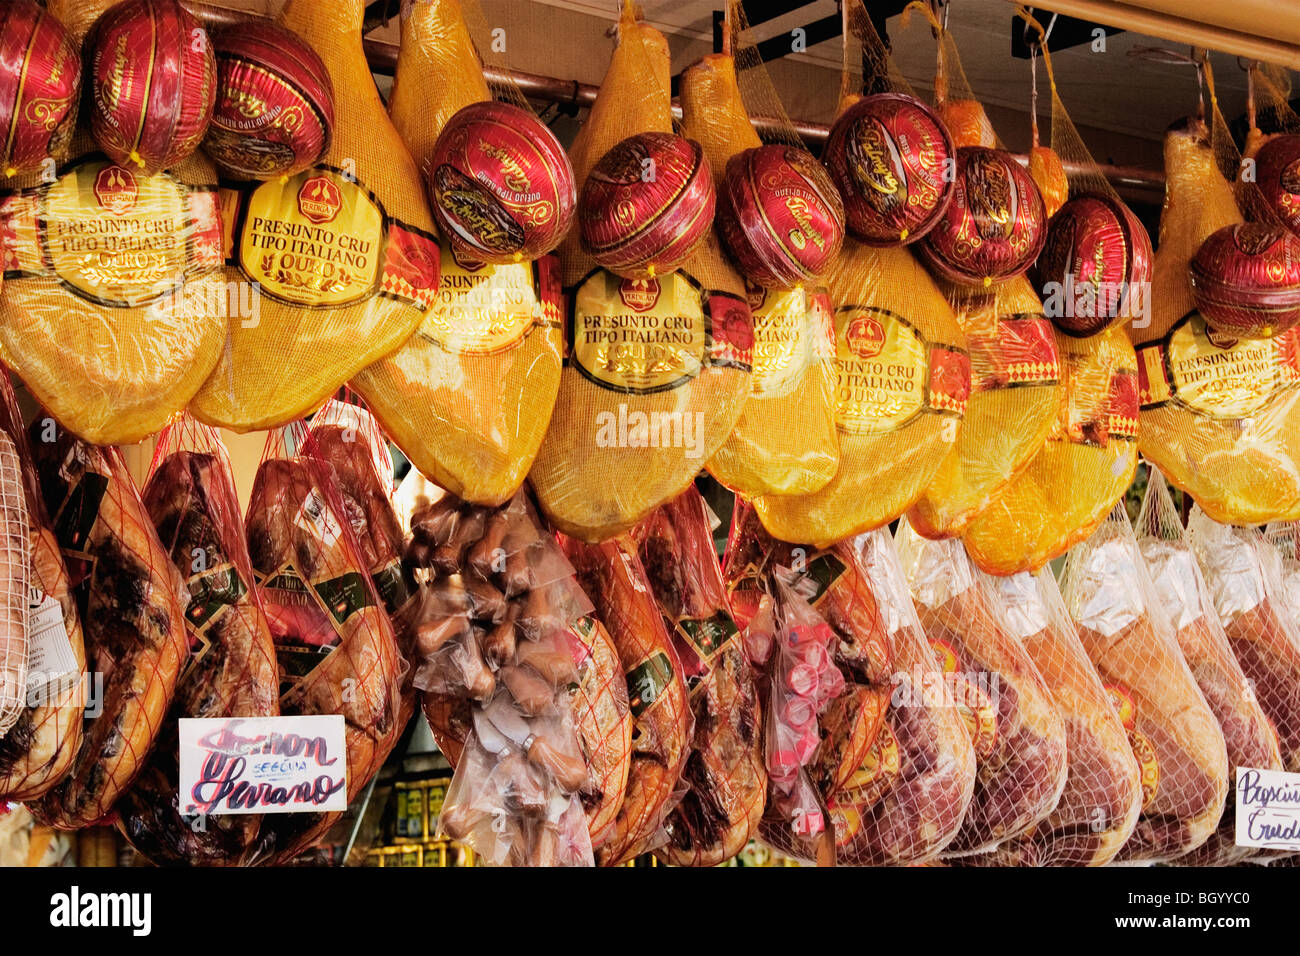 Hams and cheeses in the market Mercado Sao Paulo, Brazil Stock Photo